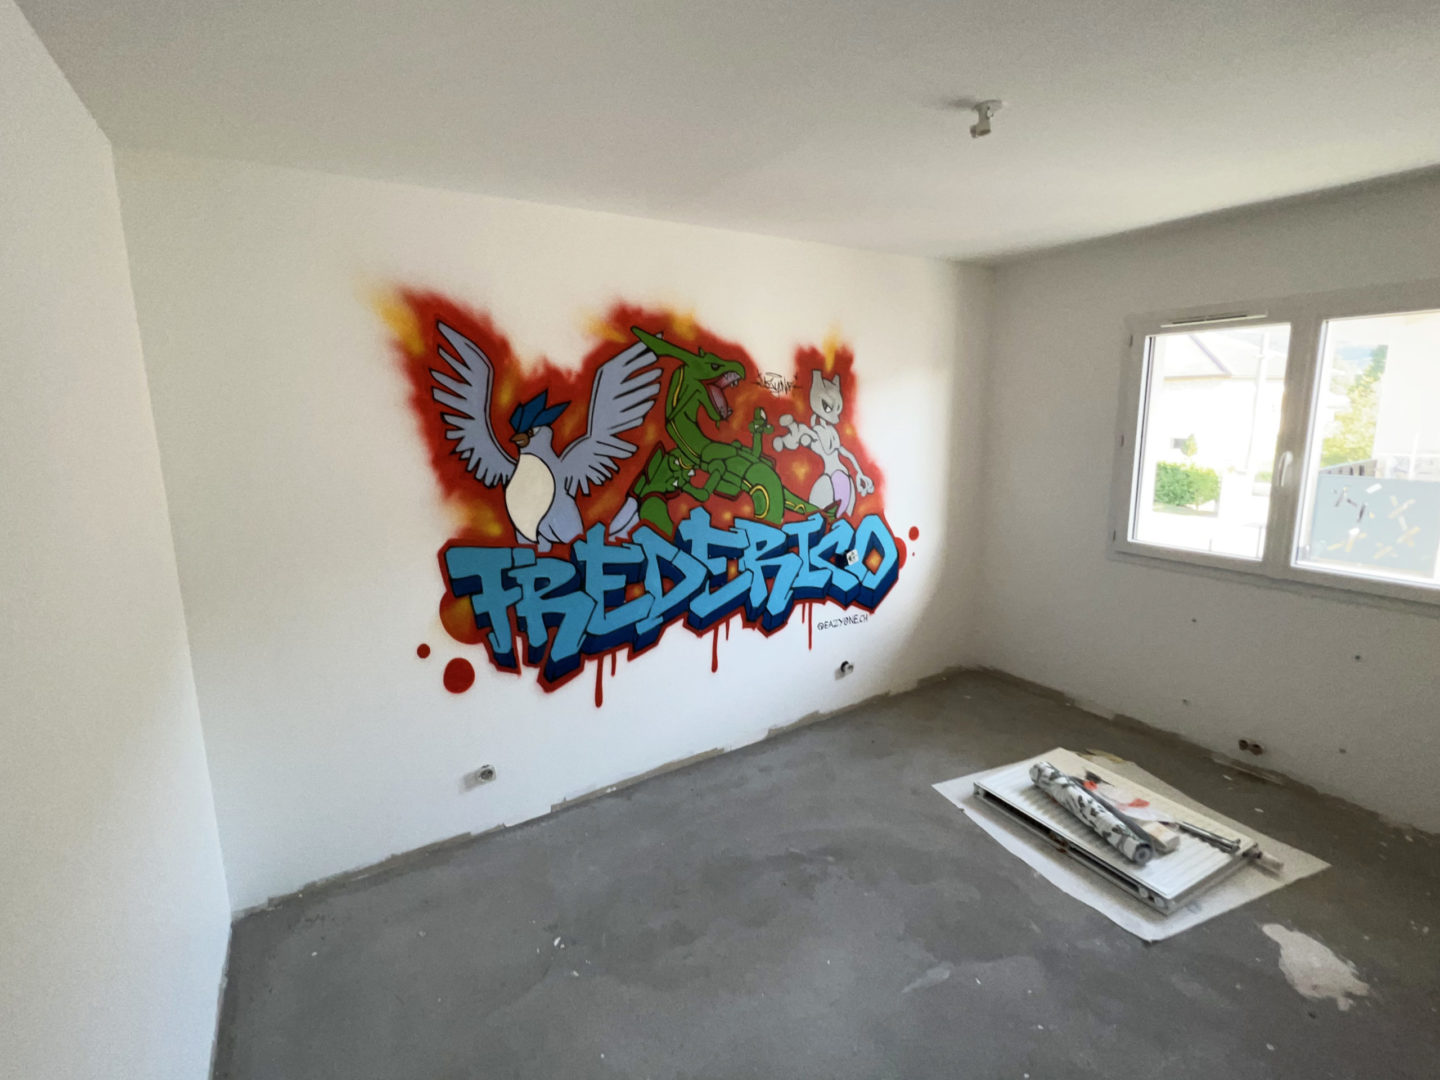 Graffiti chambre enfant frederico pokemon graffeur artiste eazy one